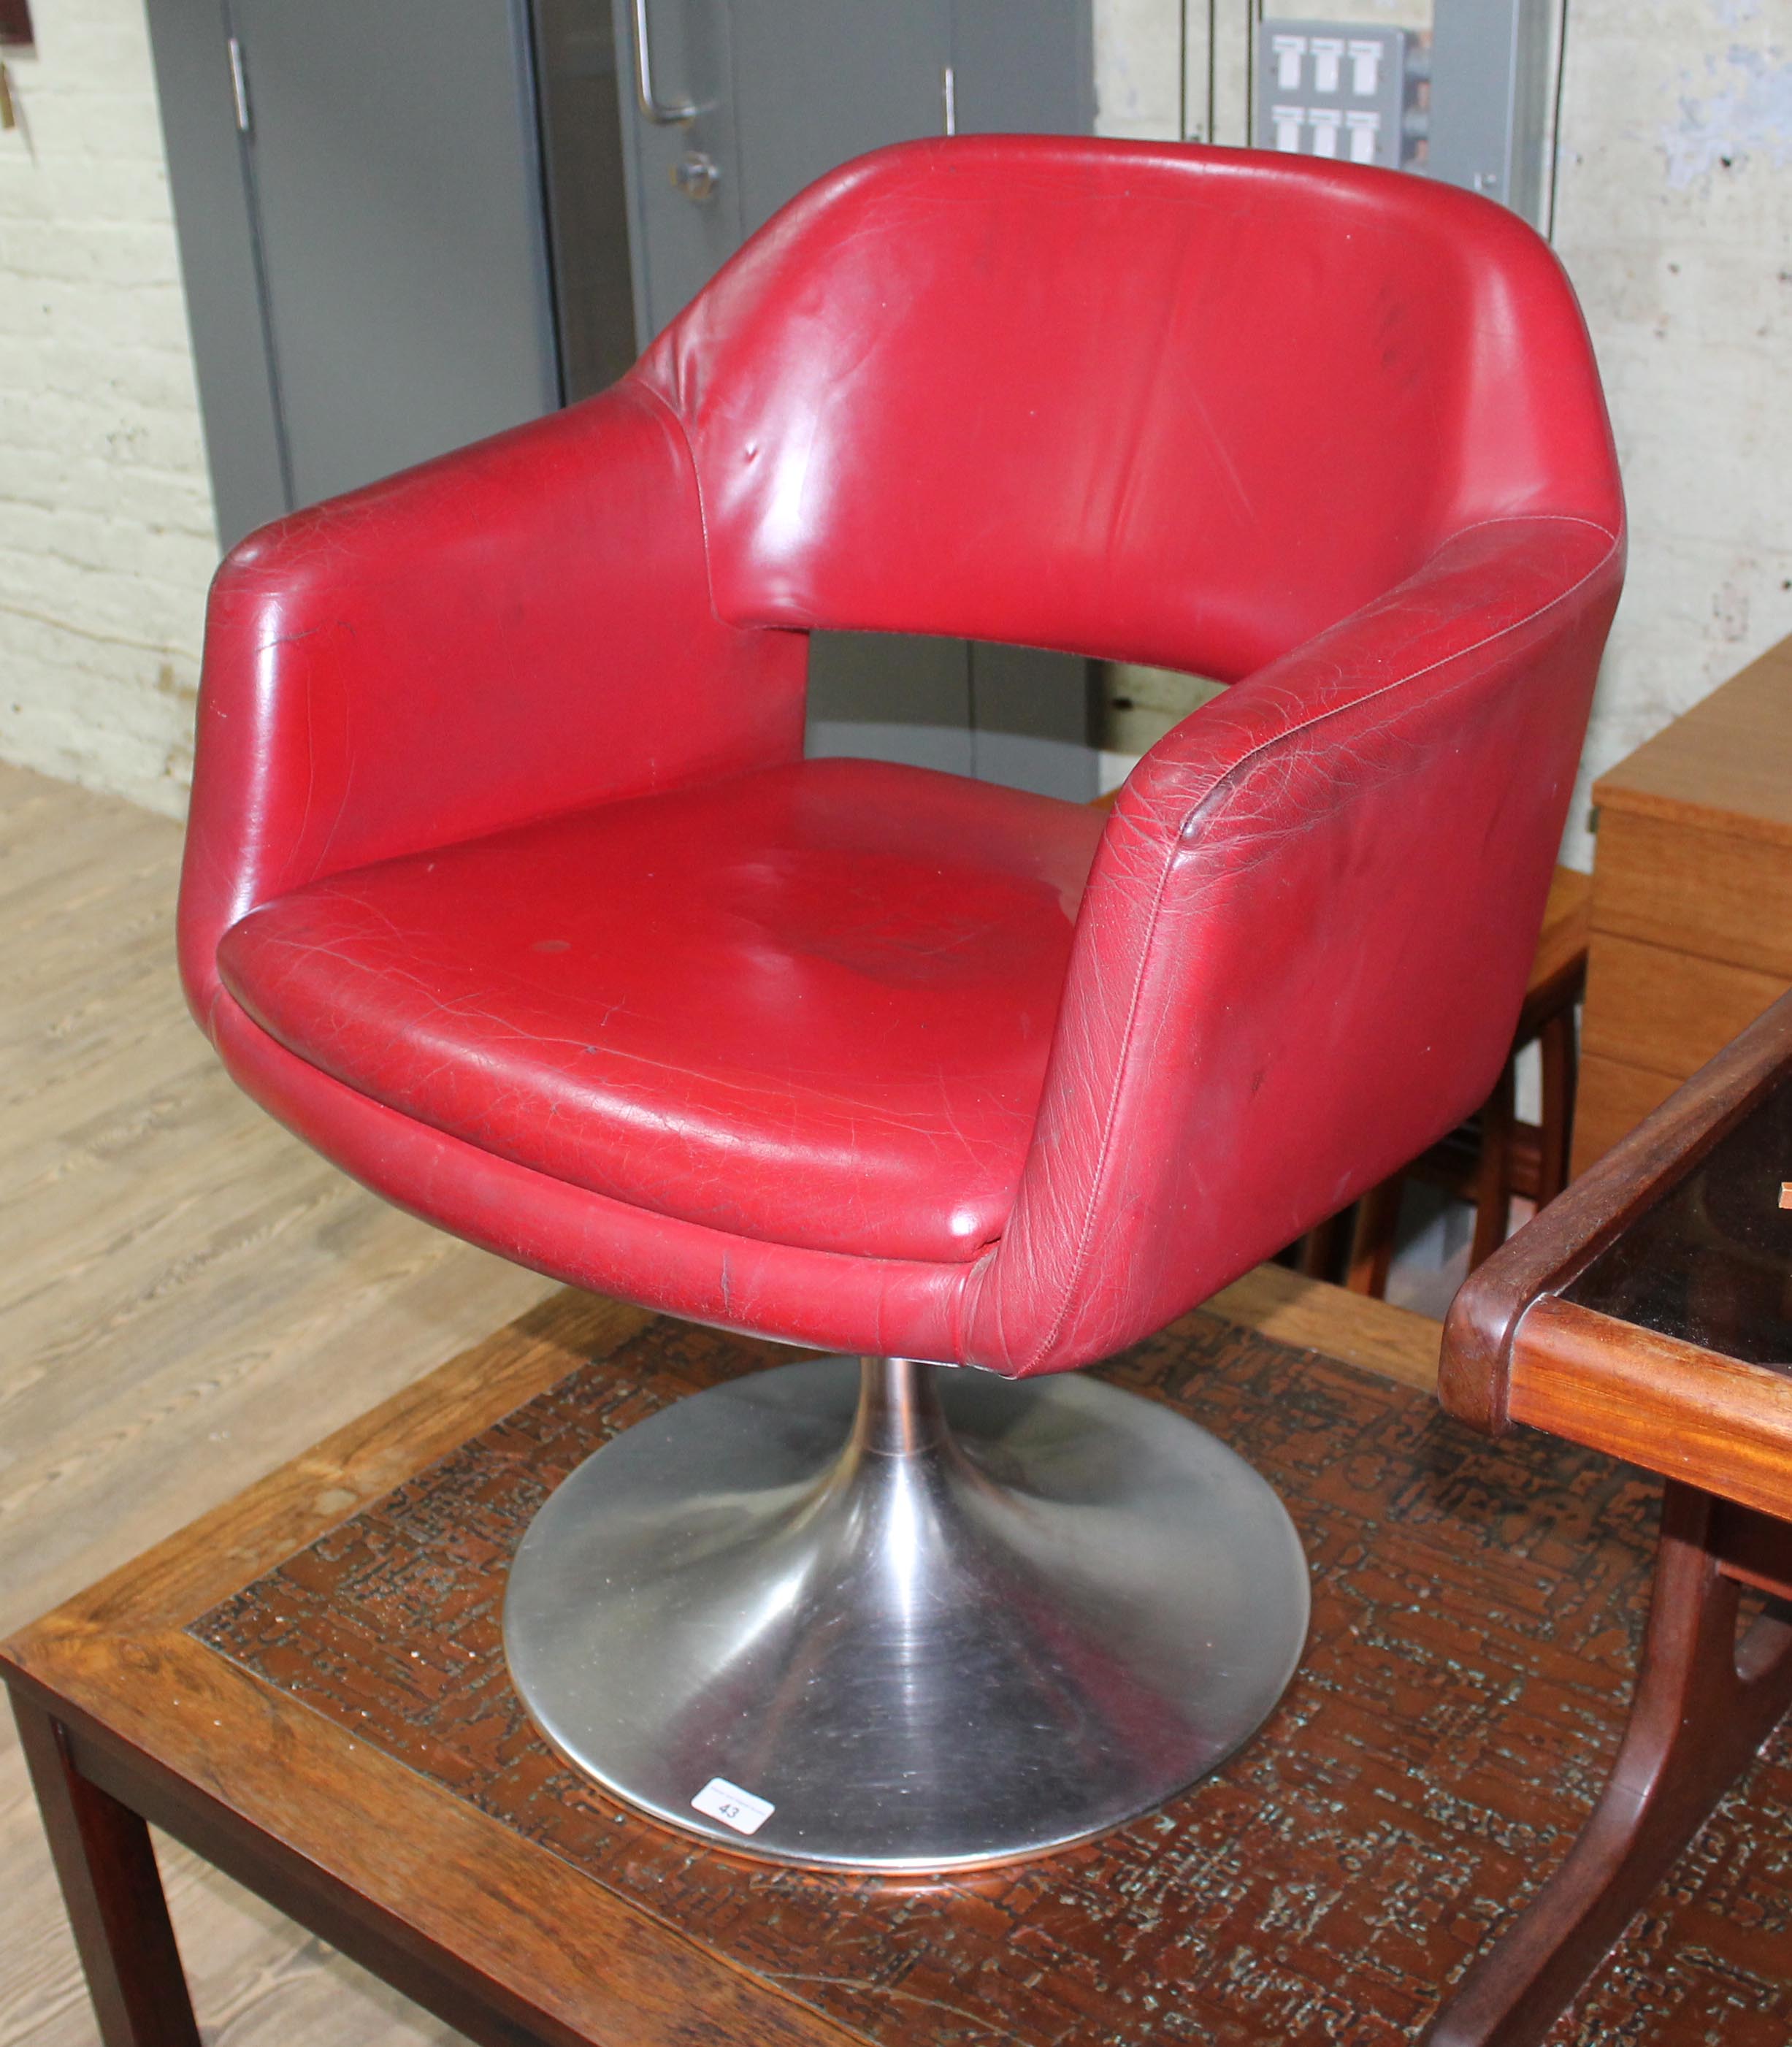 A retor tulip base chair.